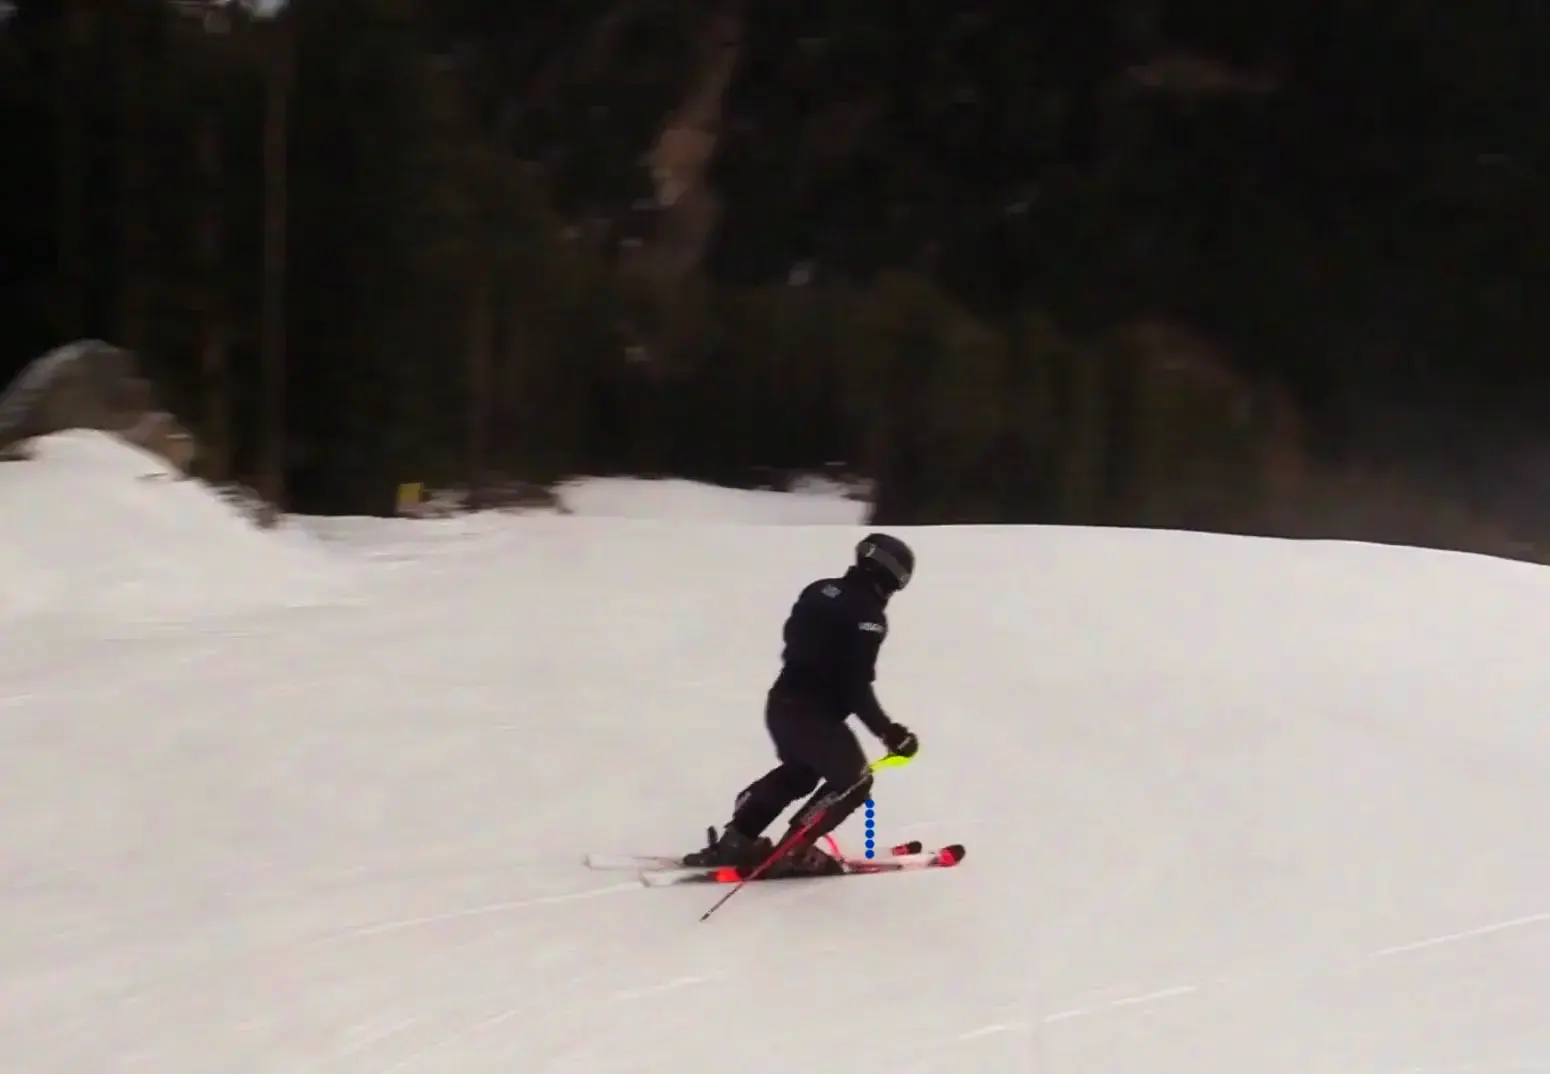 Jimmy Krupka US Ski Team Athlete - ski boot's forward lean